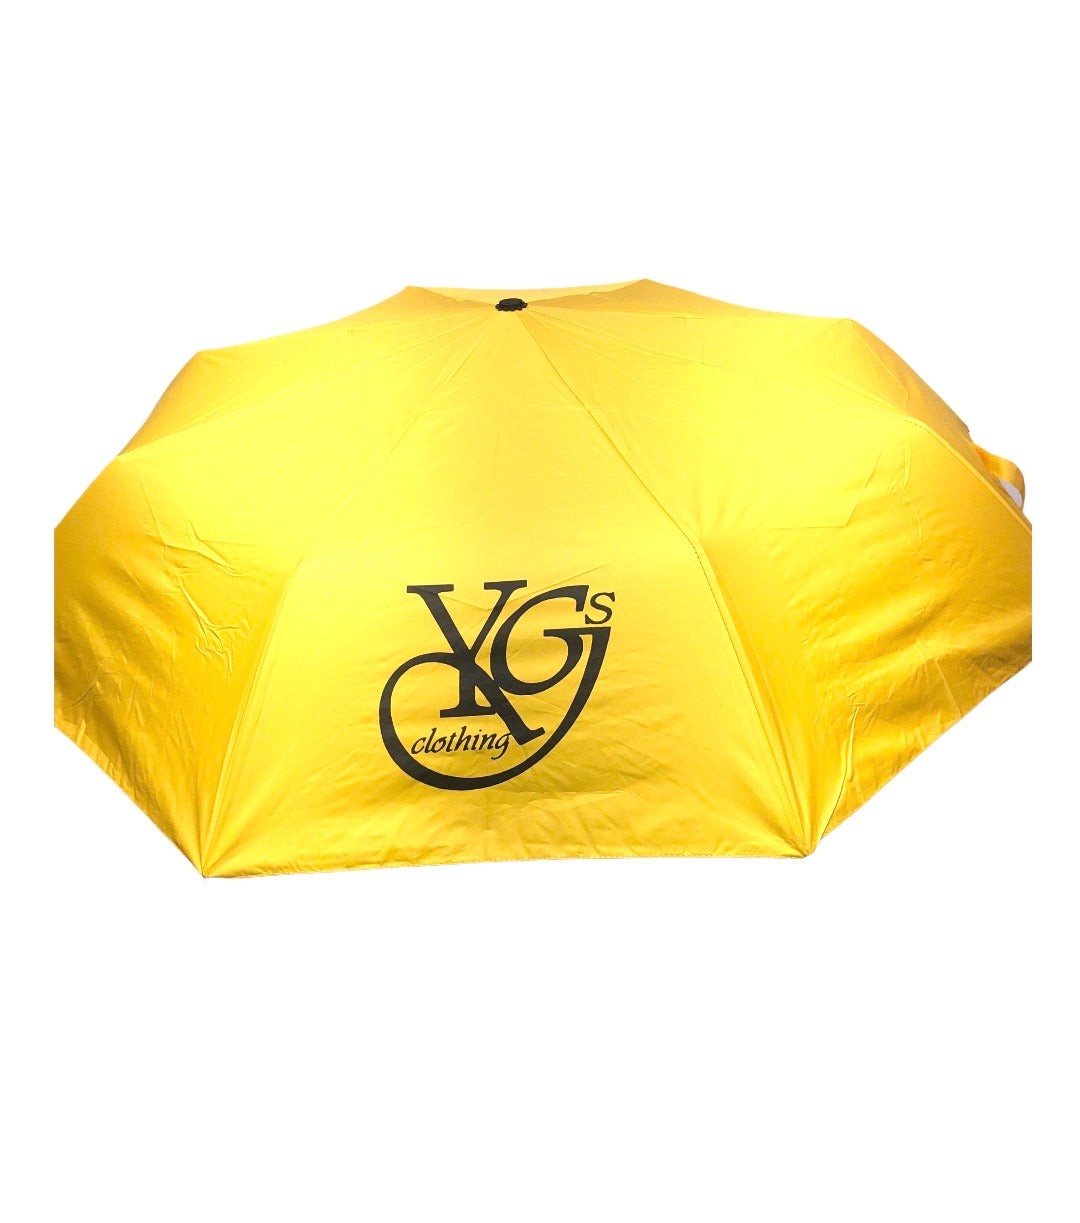 YGSC Bright Yellow Umbrella (Logo Printed)